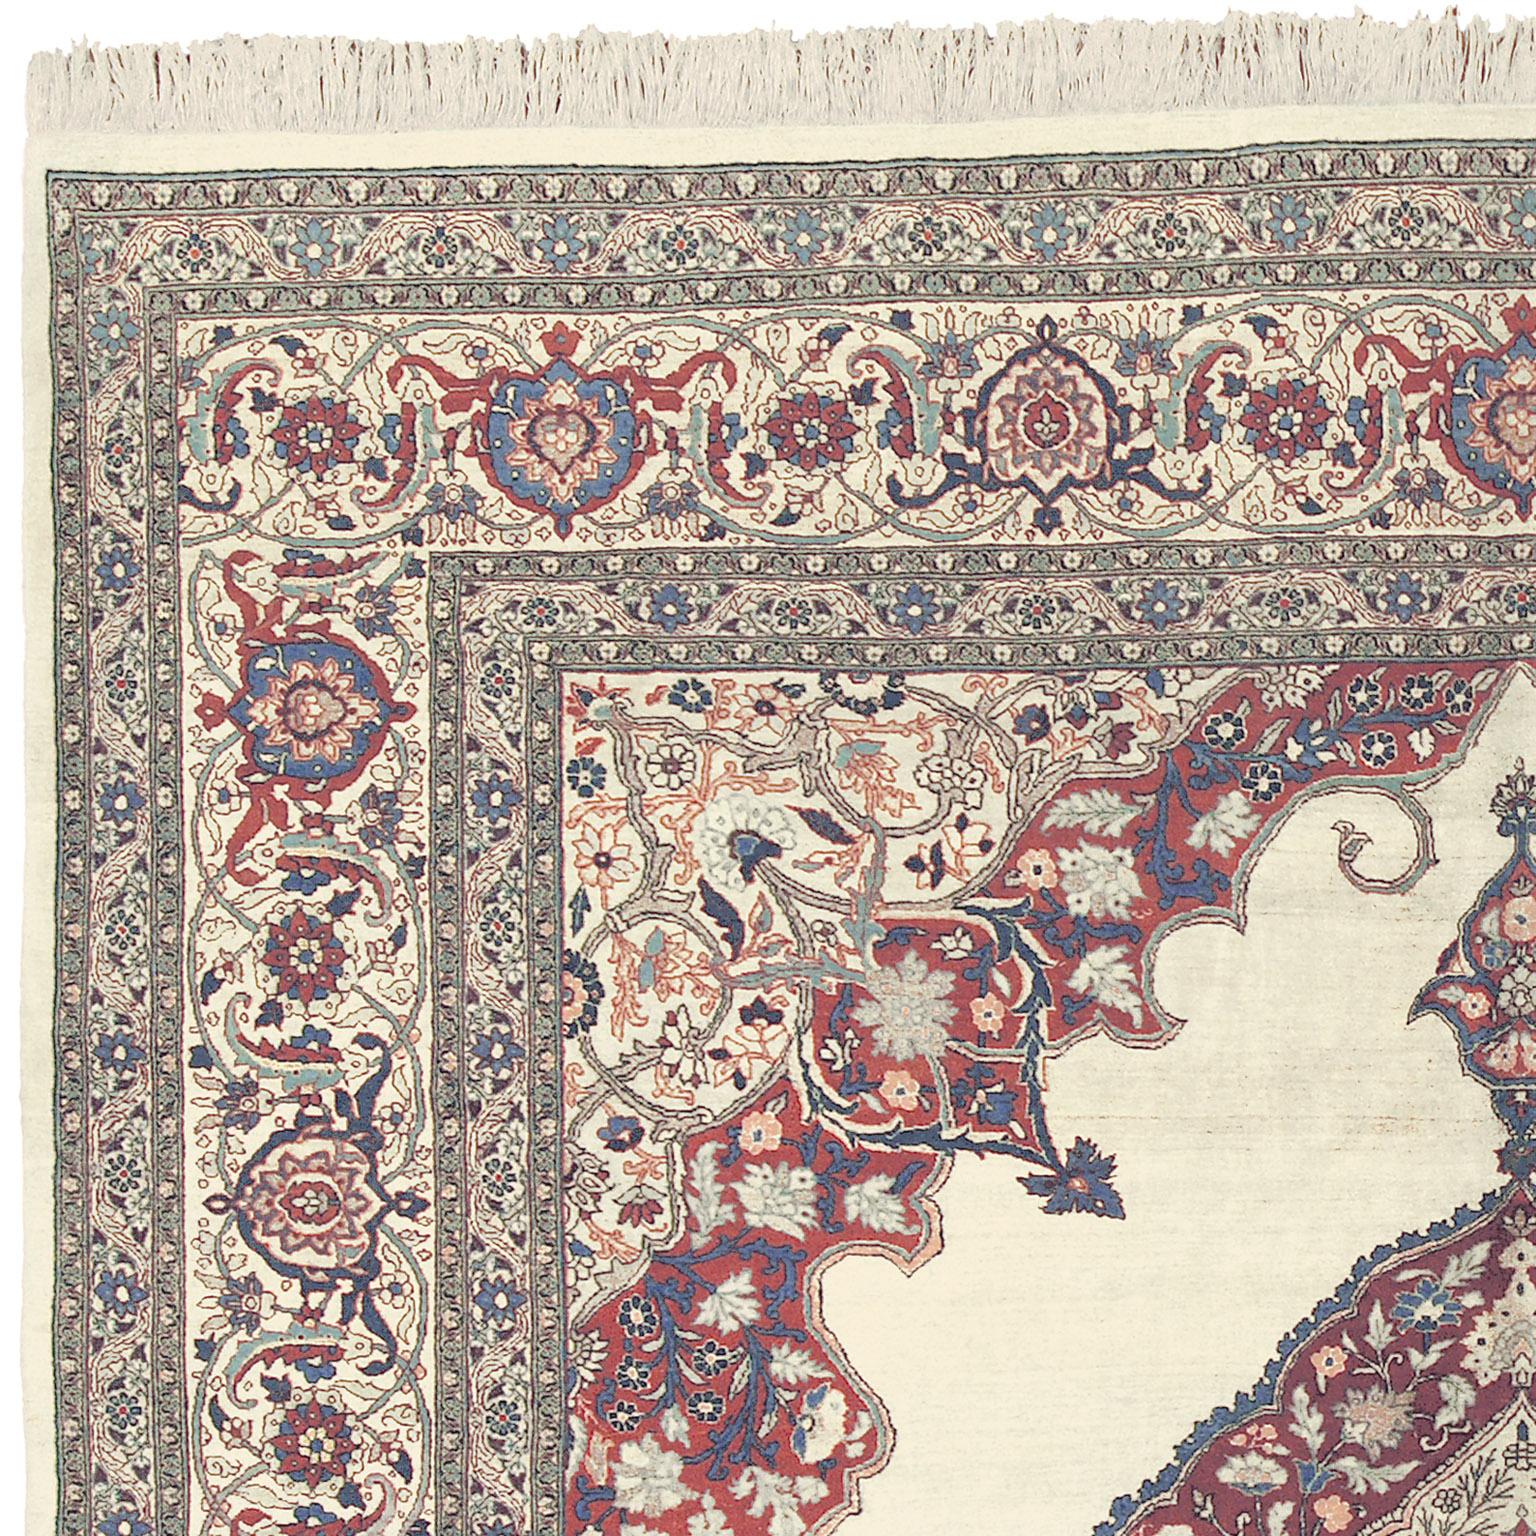 Persia ca. 1890
Measures: 12'6